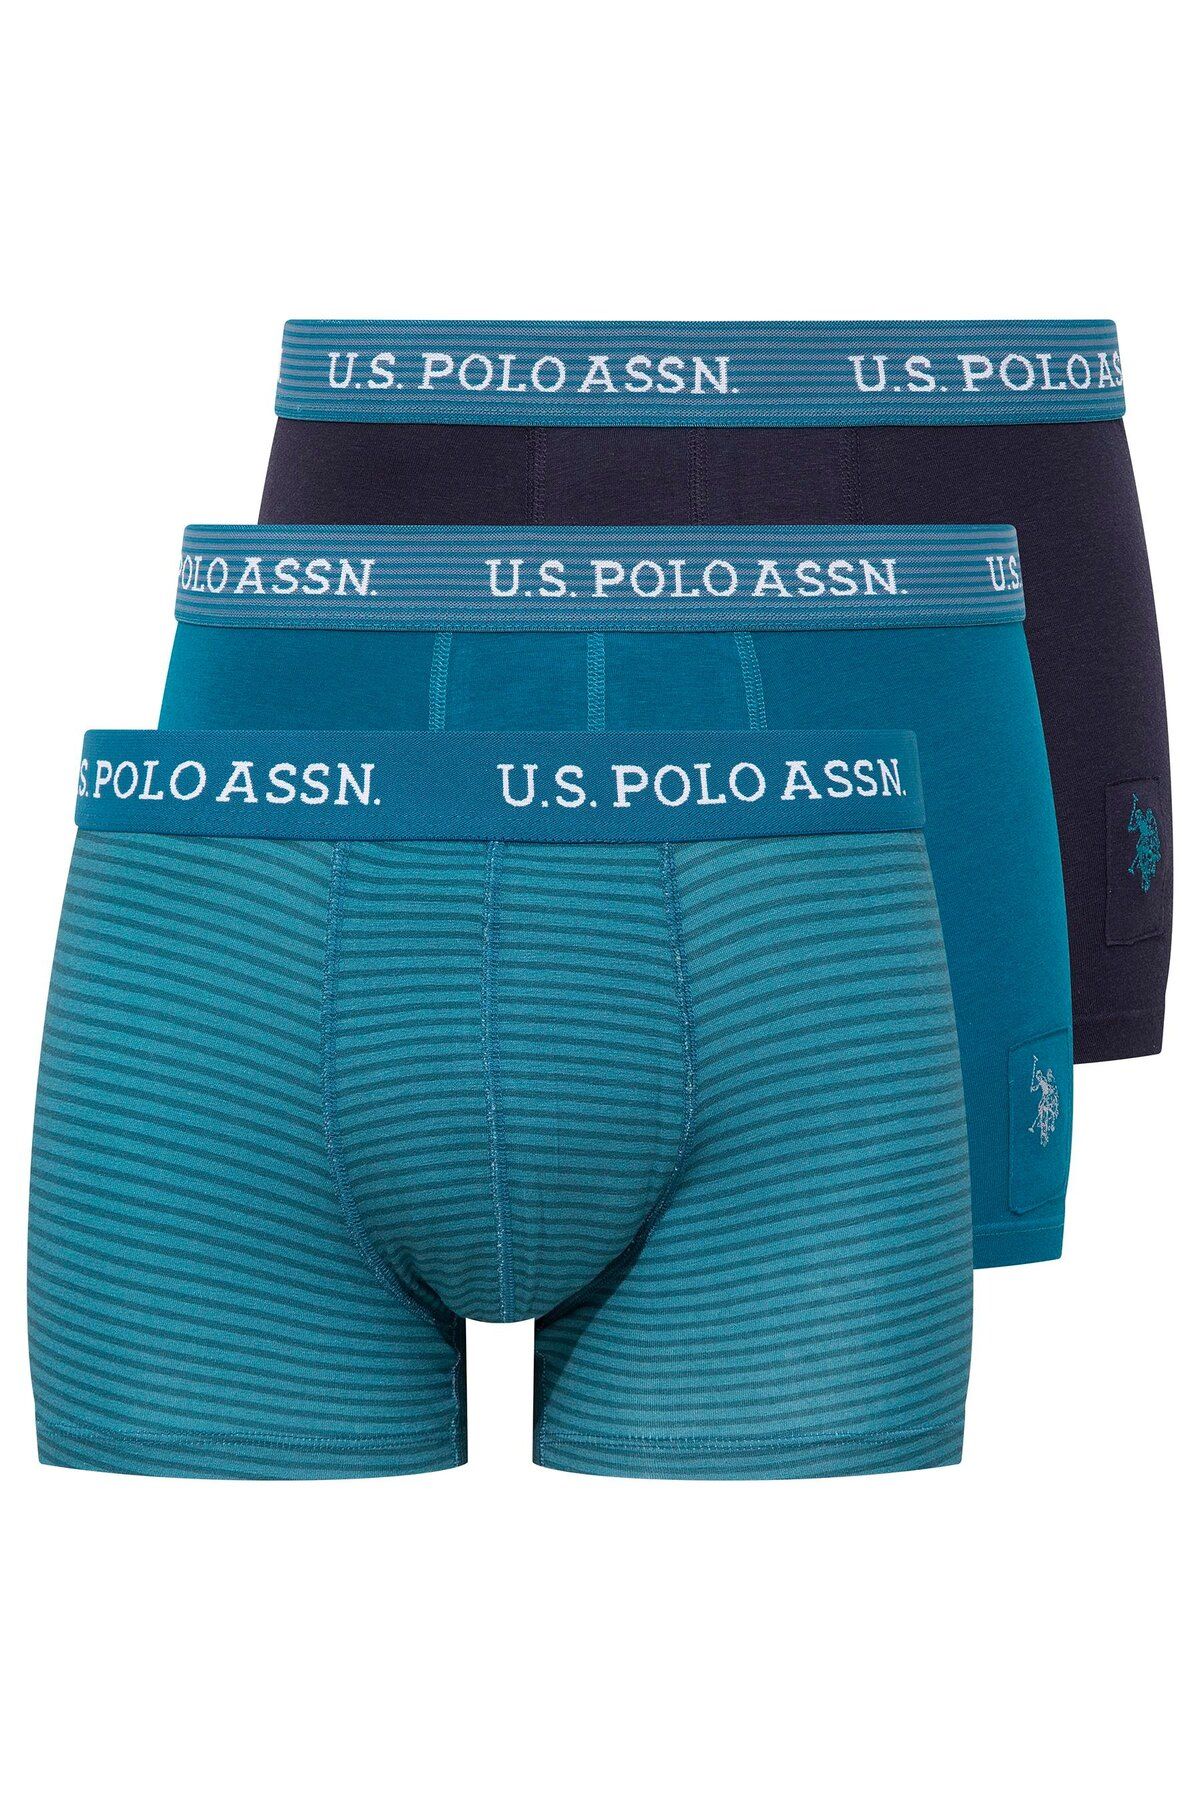 U.S. Polo Assn. U.S. Polo Assn. Erkek İç Giyim Yeşil & Lacivert & Baskılı 3'lü Boxer Set L.2.0.1.L.0.96